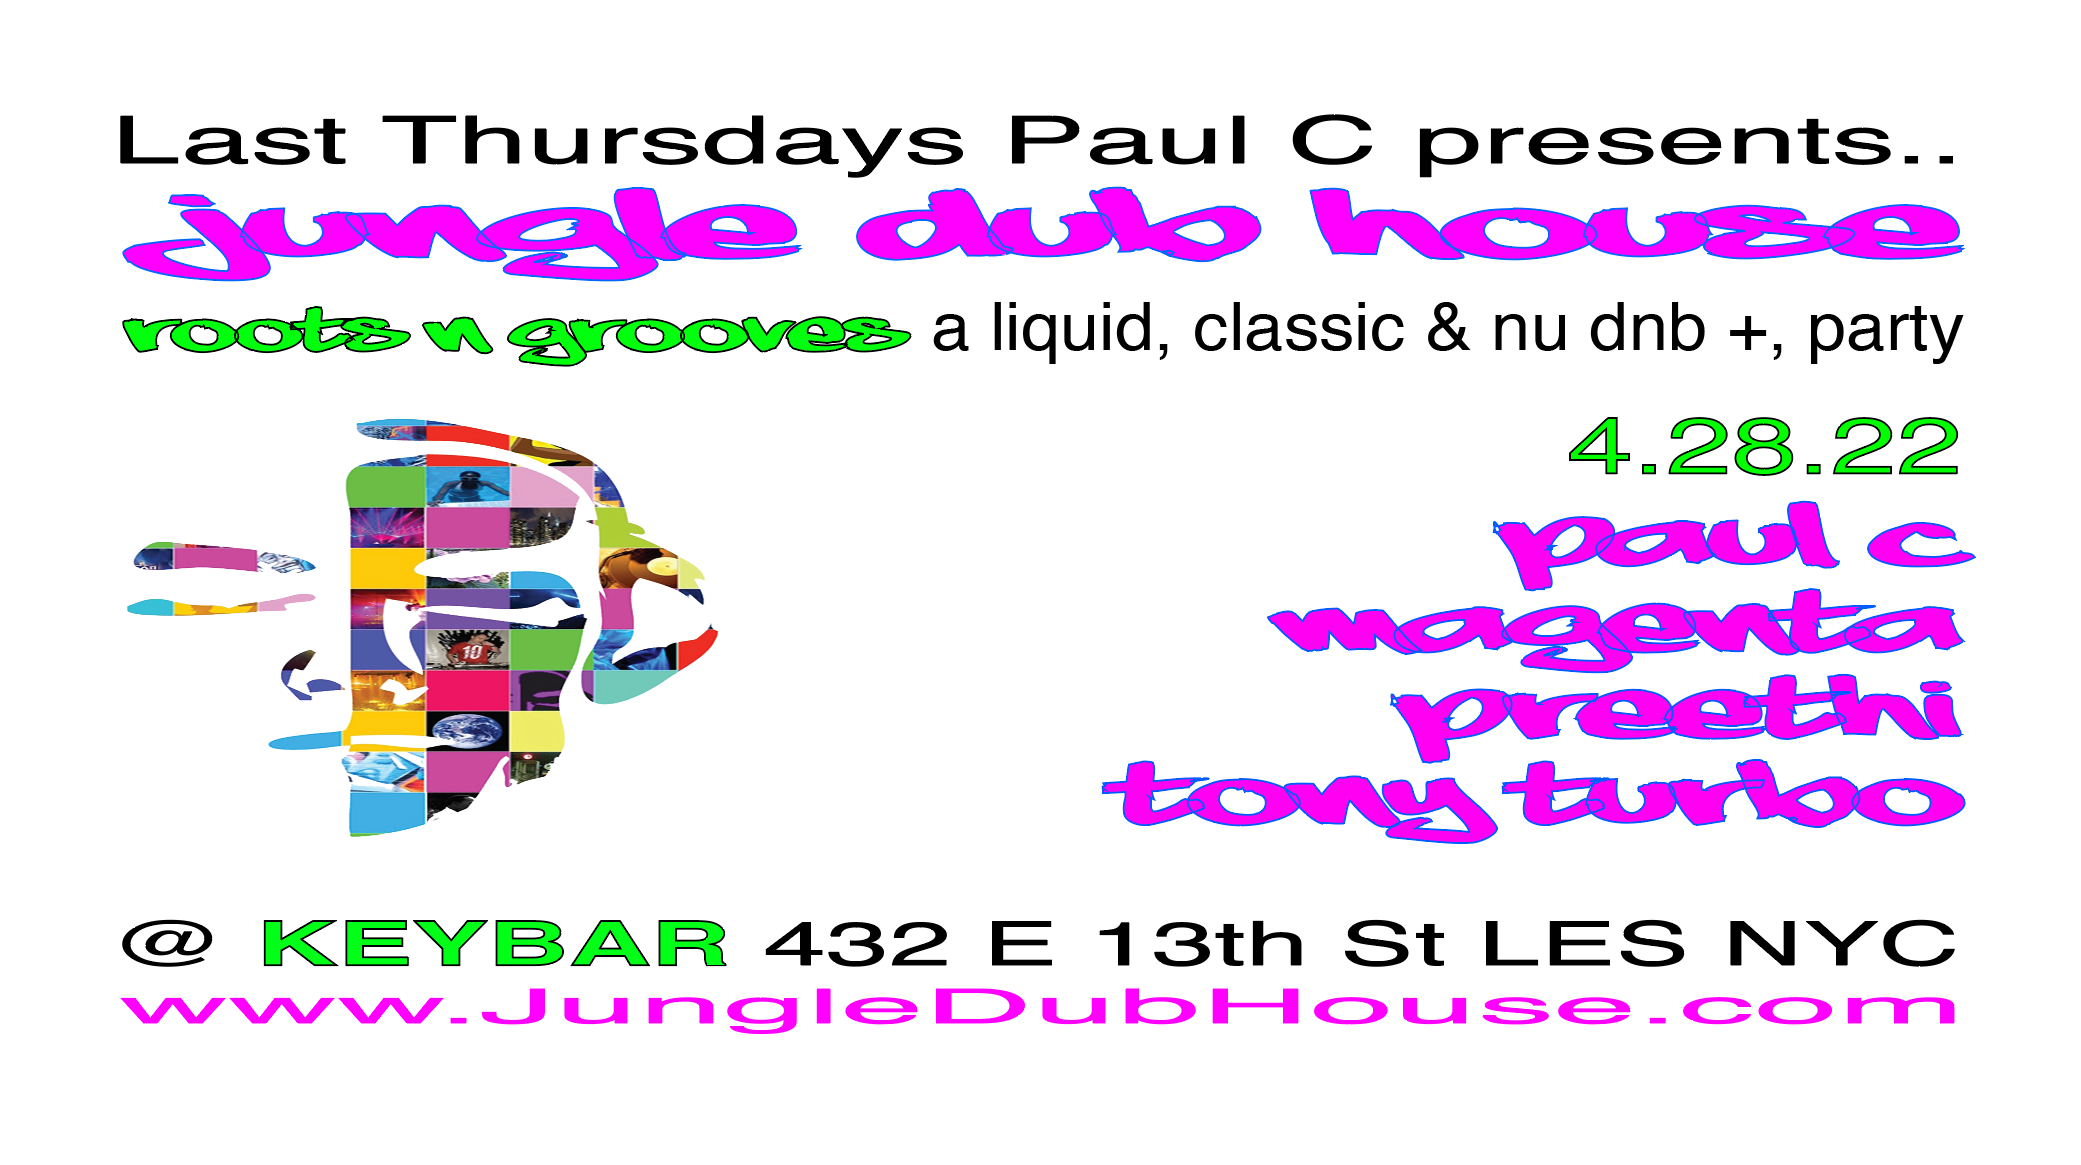 Jungle Dub House dnb +, Paul C Magenta Preethi Turbo - フライヤー表